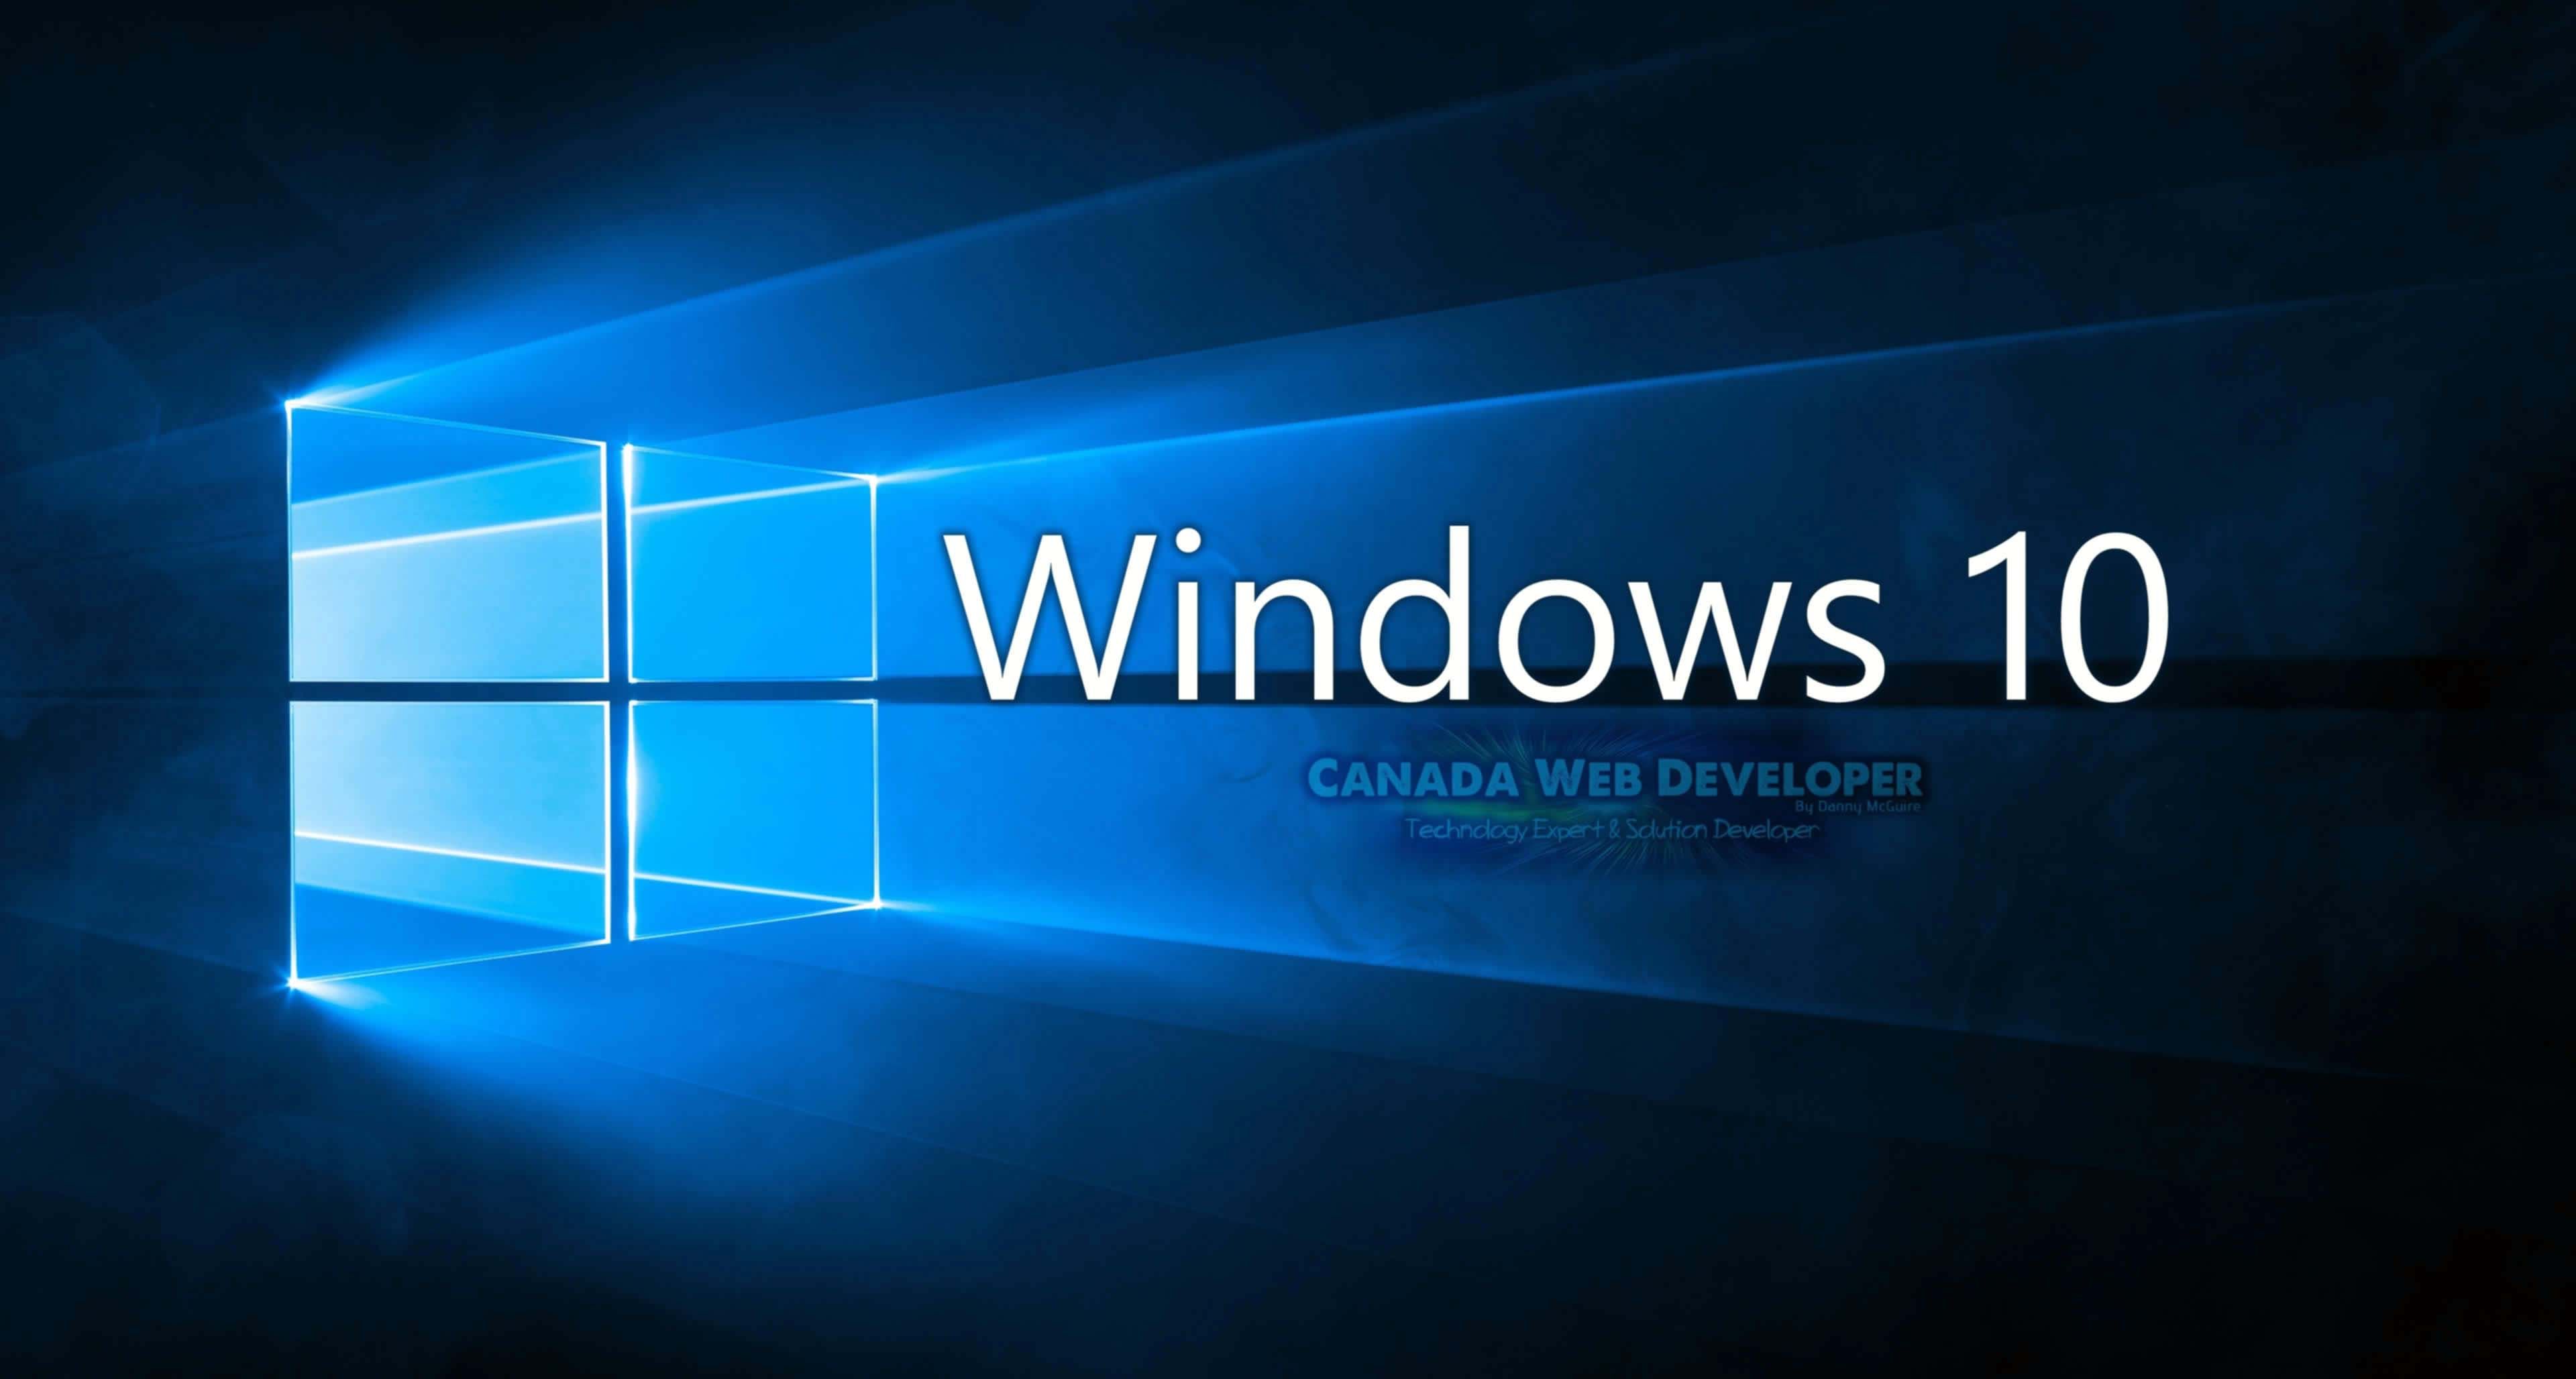 HD ویندوز 10 (Windows 10 HD Background)